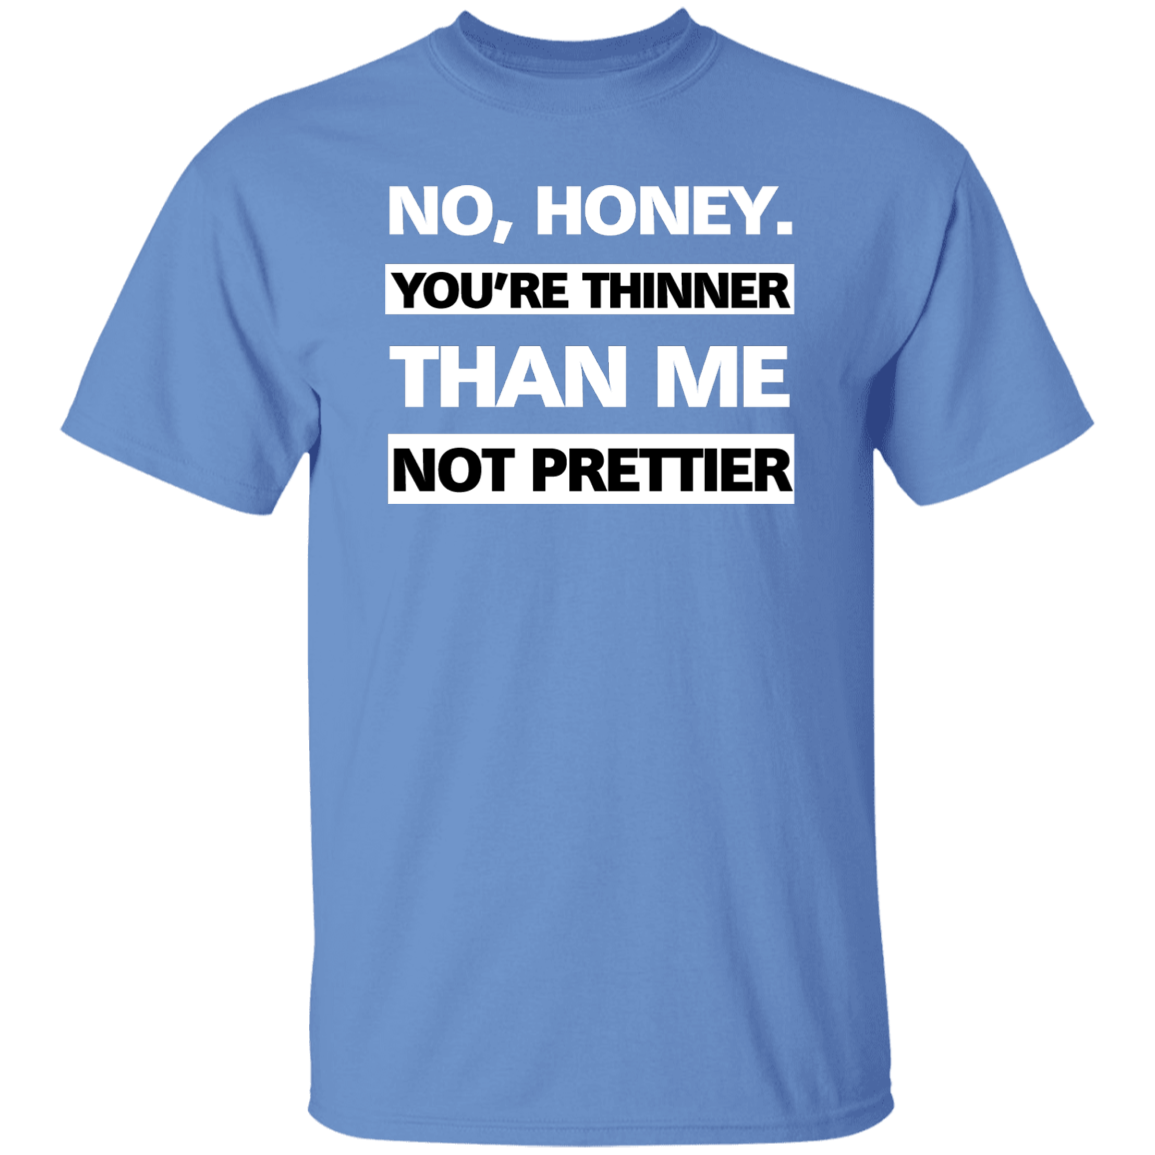 Thinner no Prettier -  T-Shirt